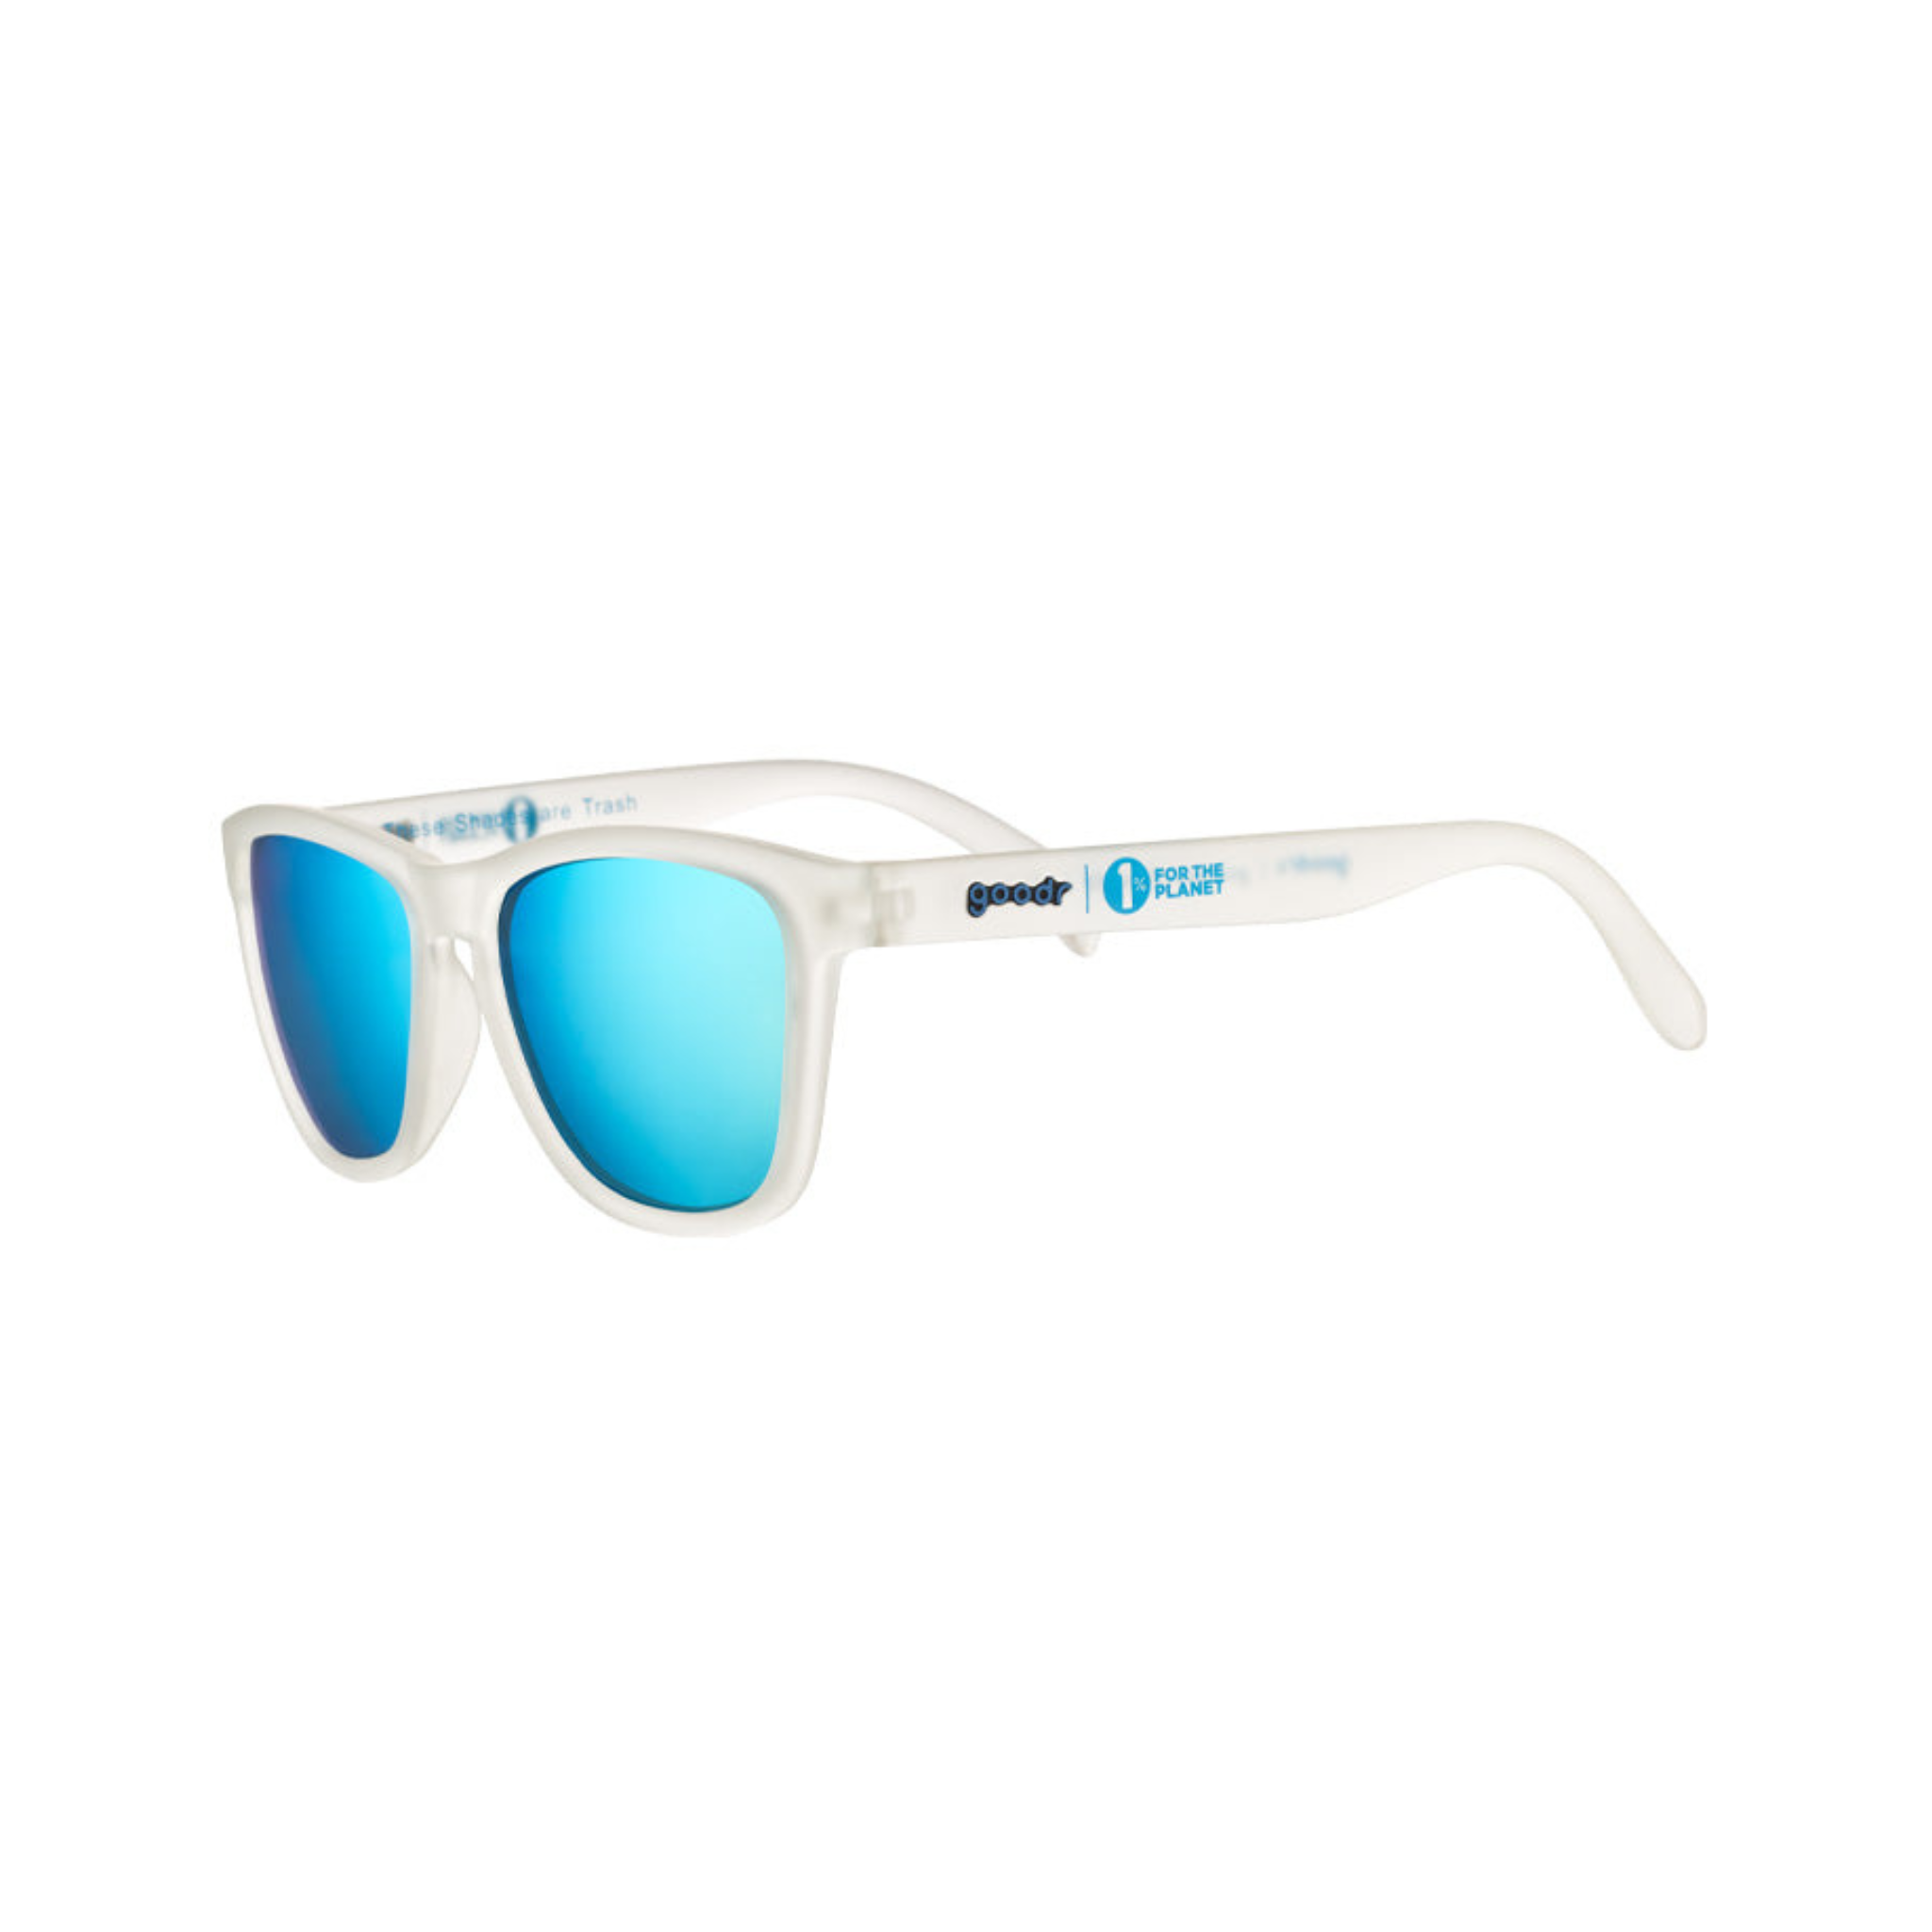 Goodr - OG Sunglasses Silverback Squat Mobility